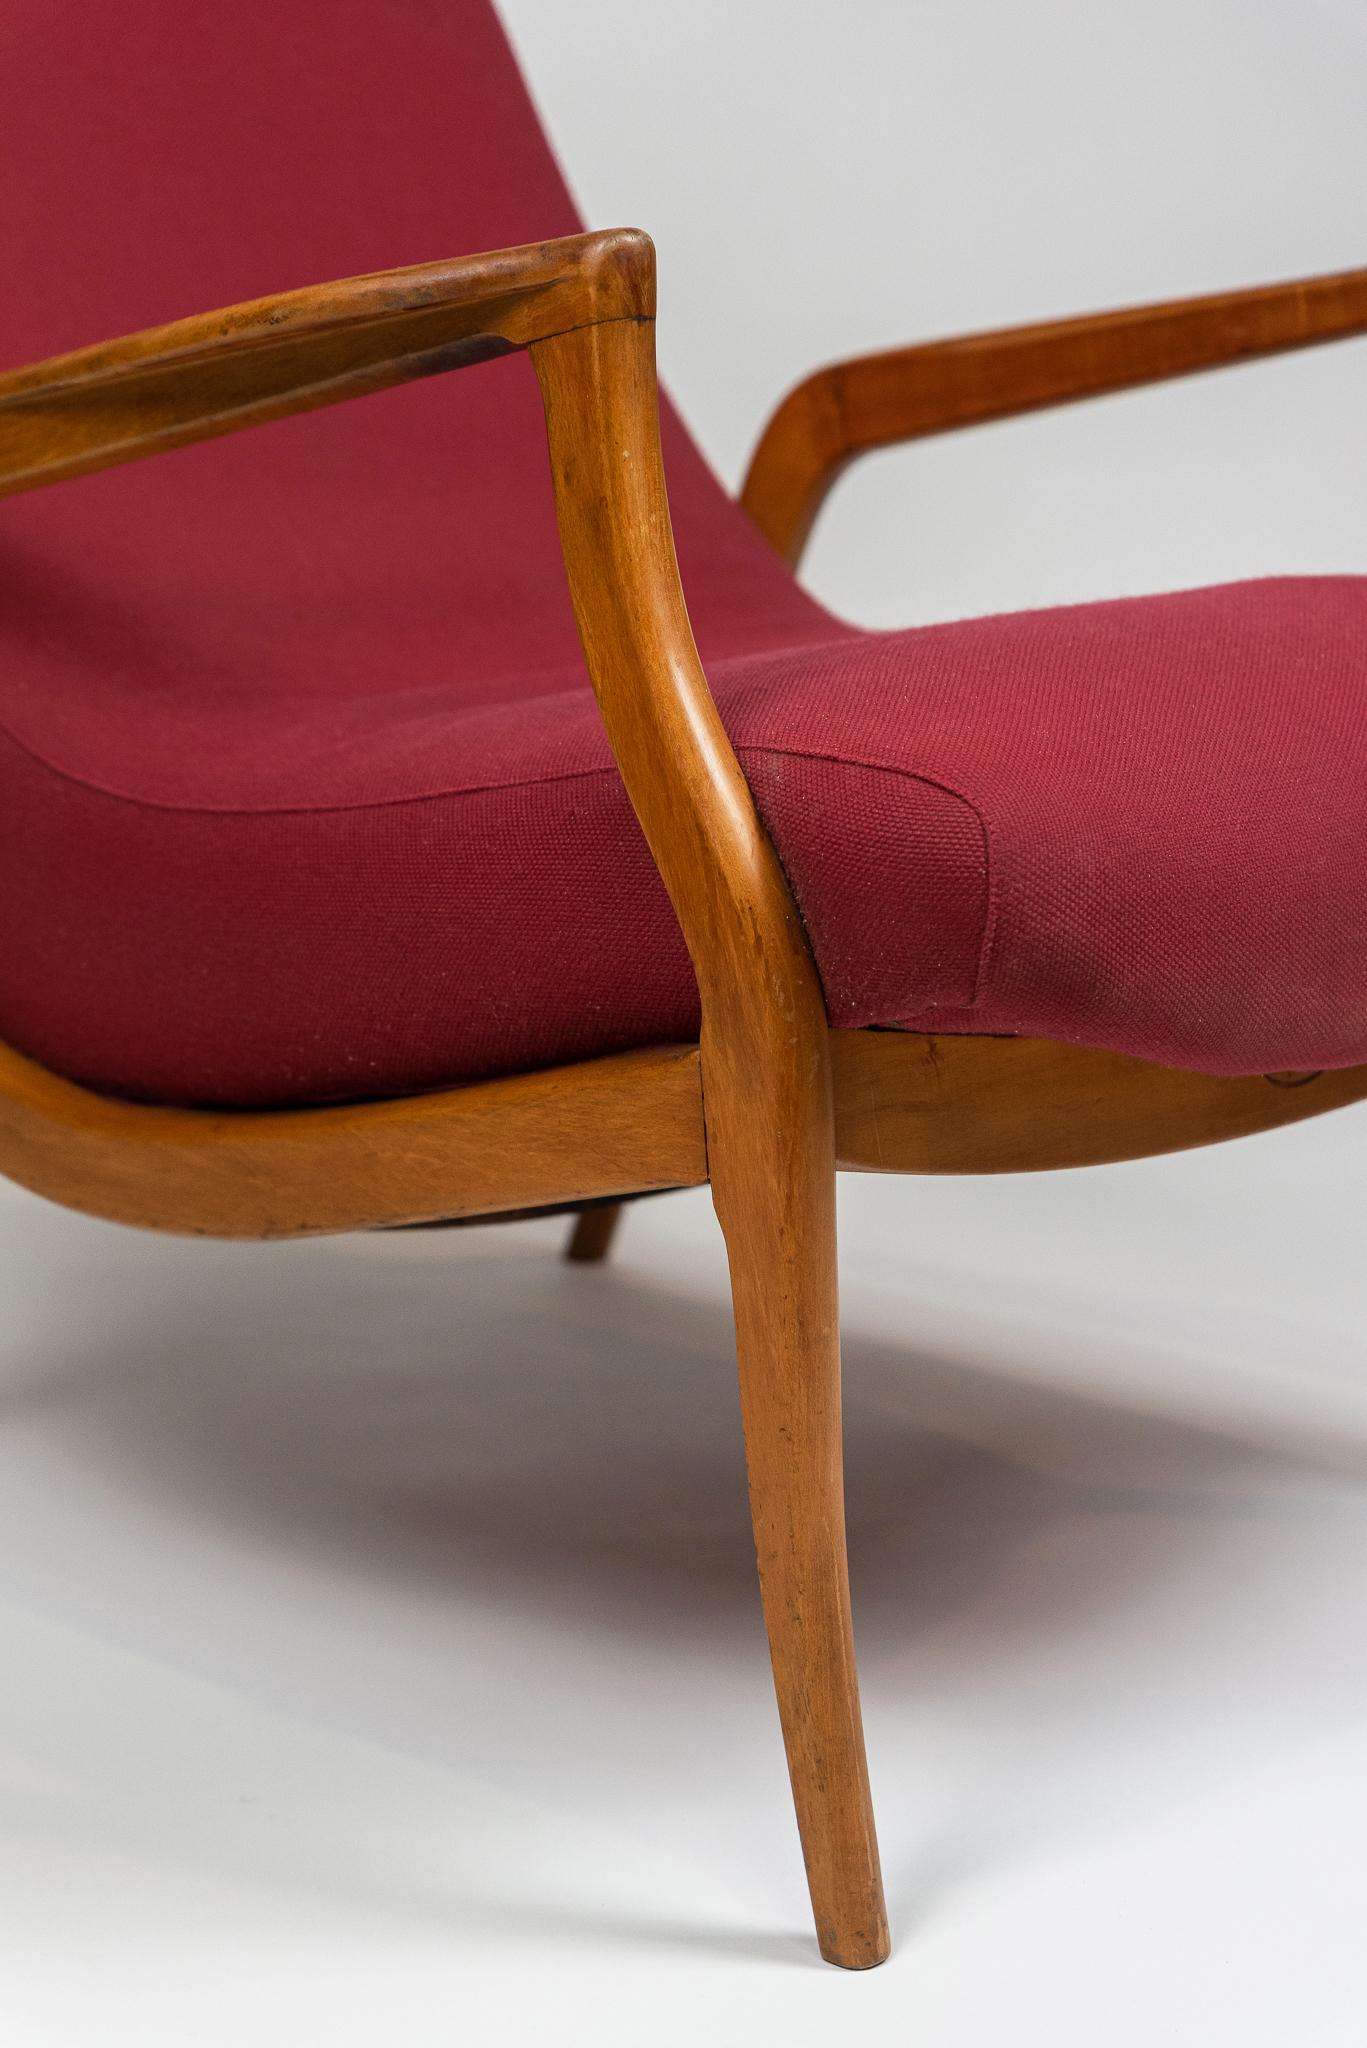 Armchair, c. 1950 in Caviuna and cotton.

Gelli armchair in solid wood 